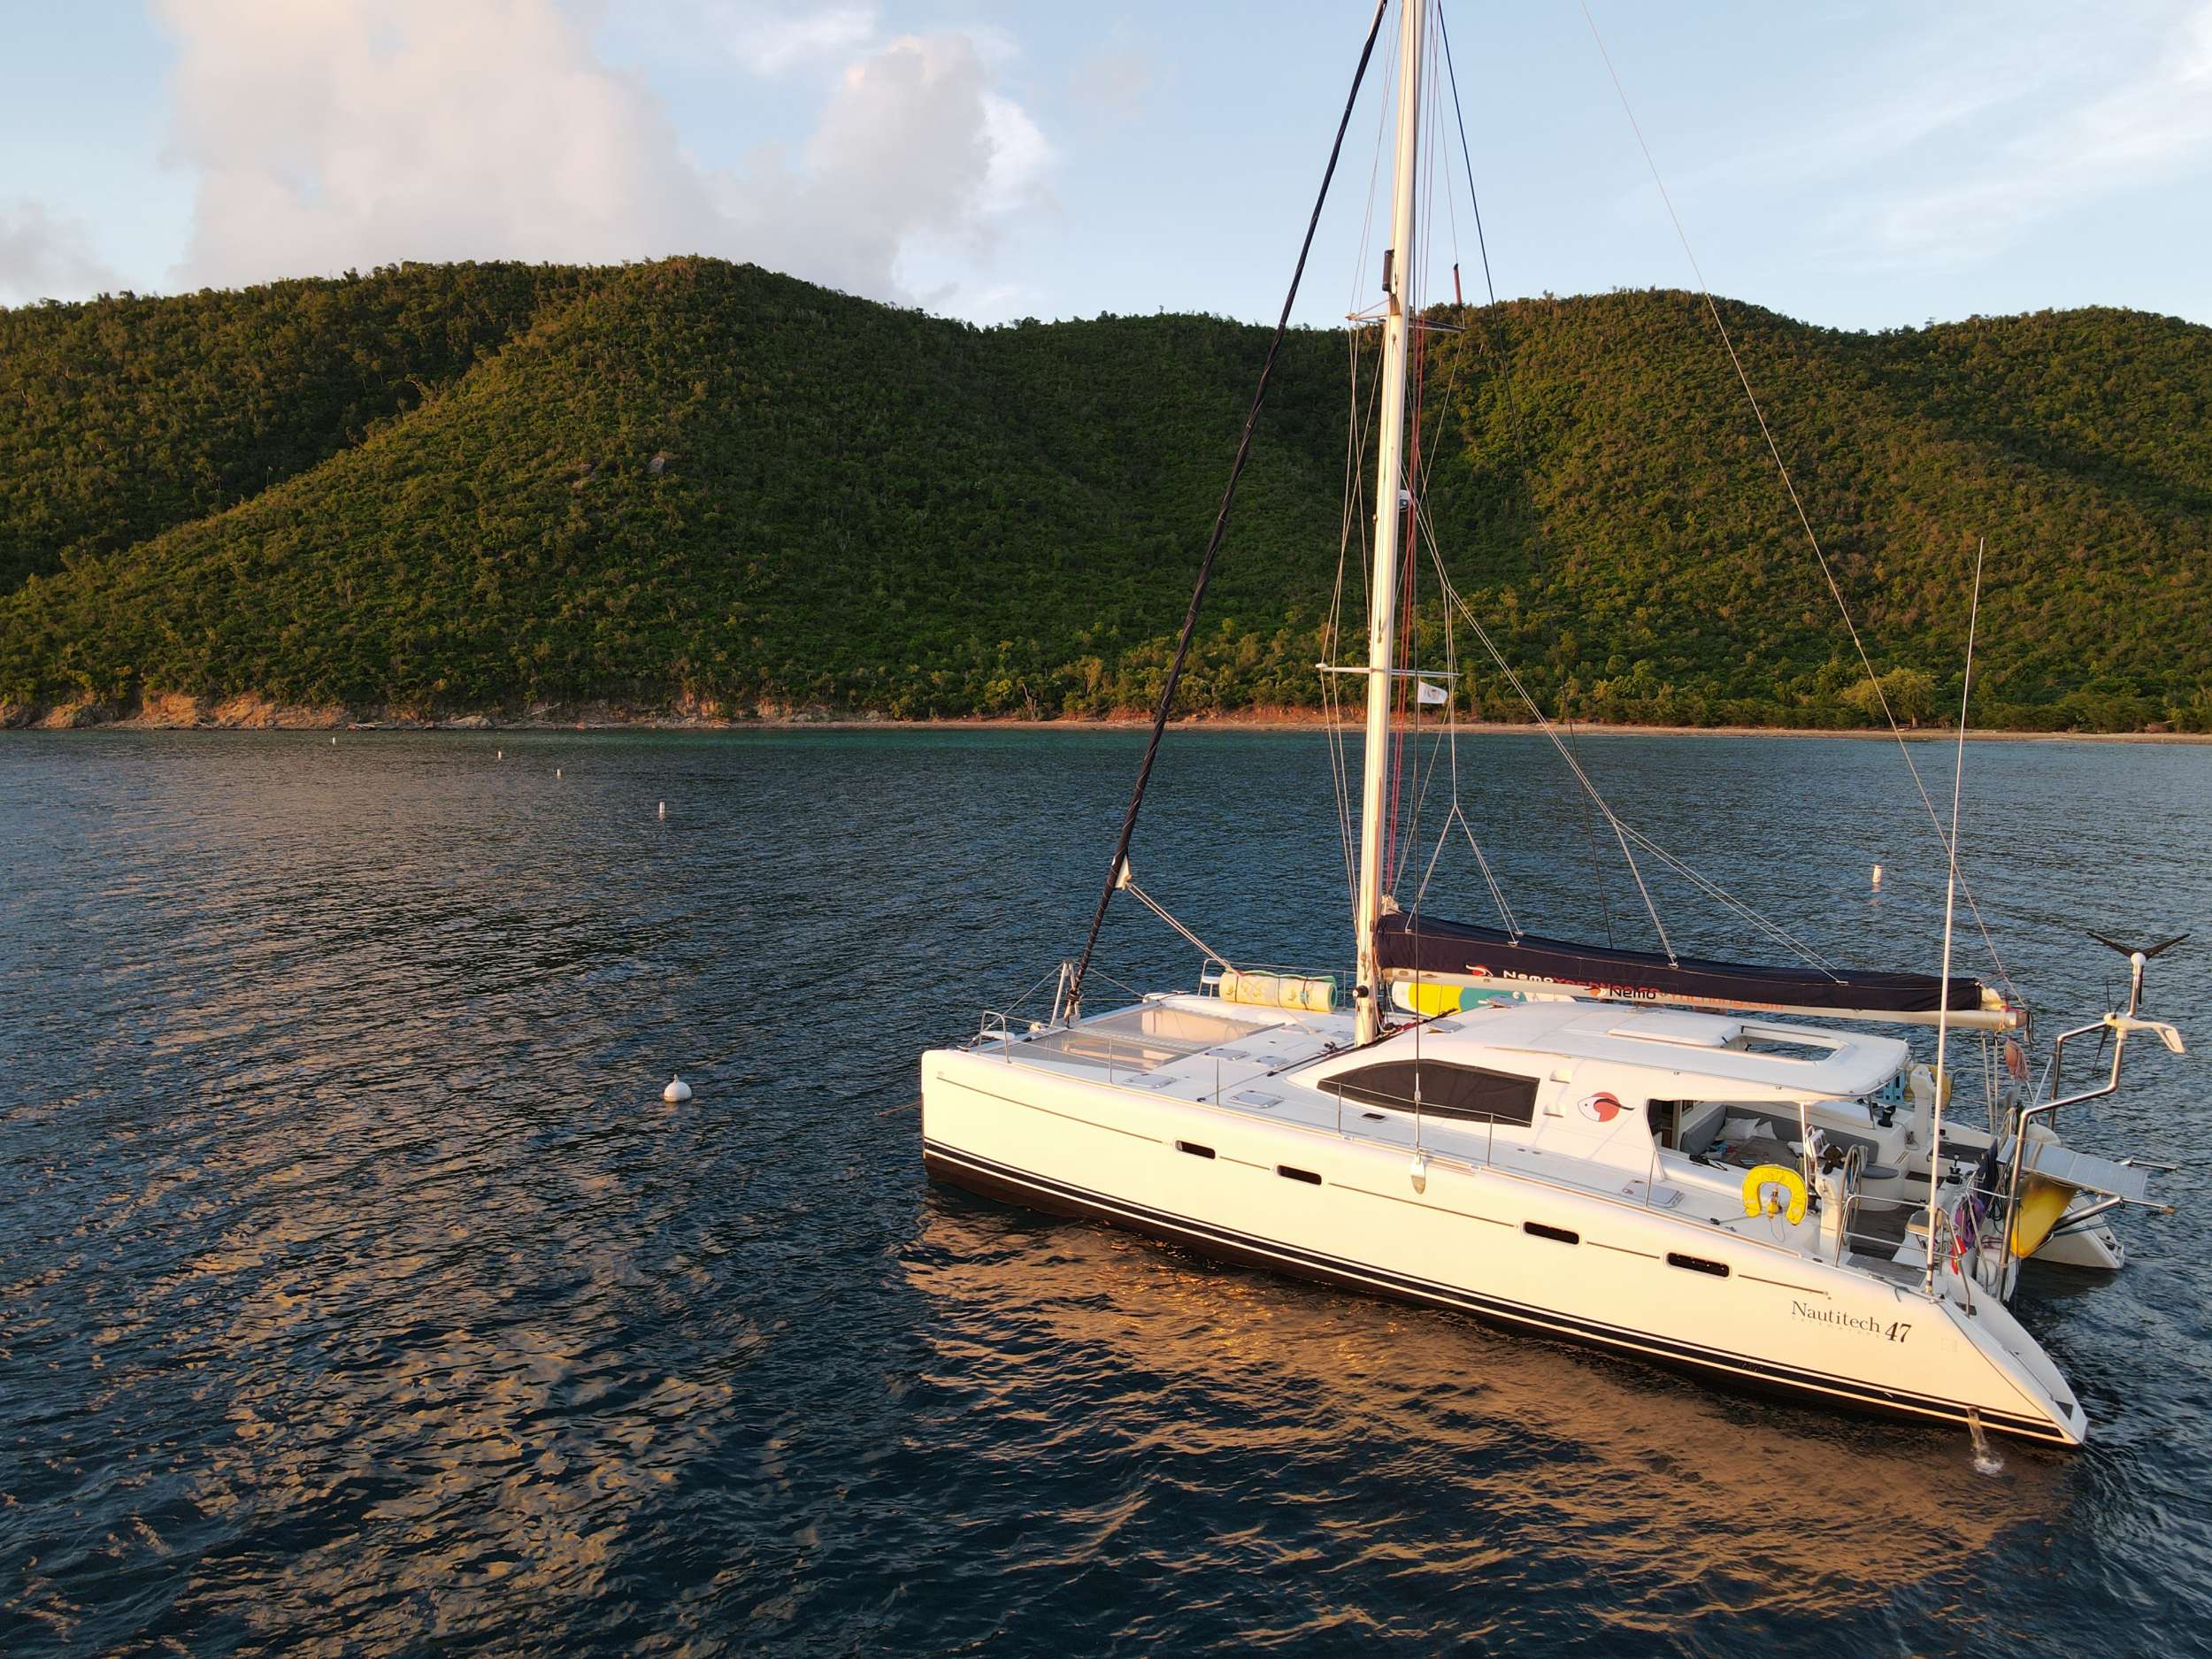 NEMO Yacht Charter - Drone Photo!